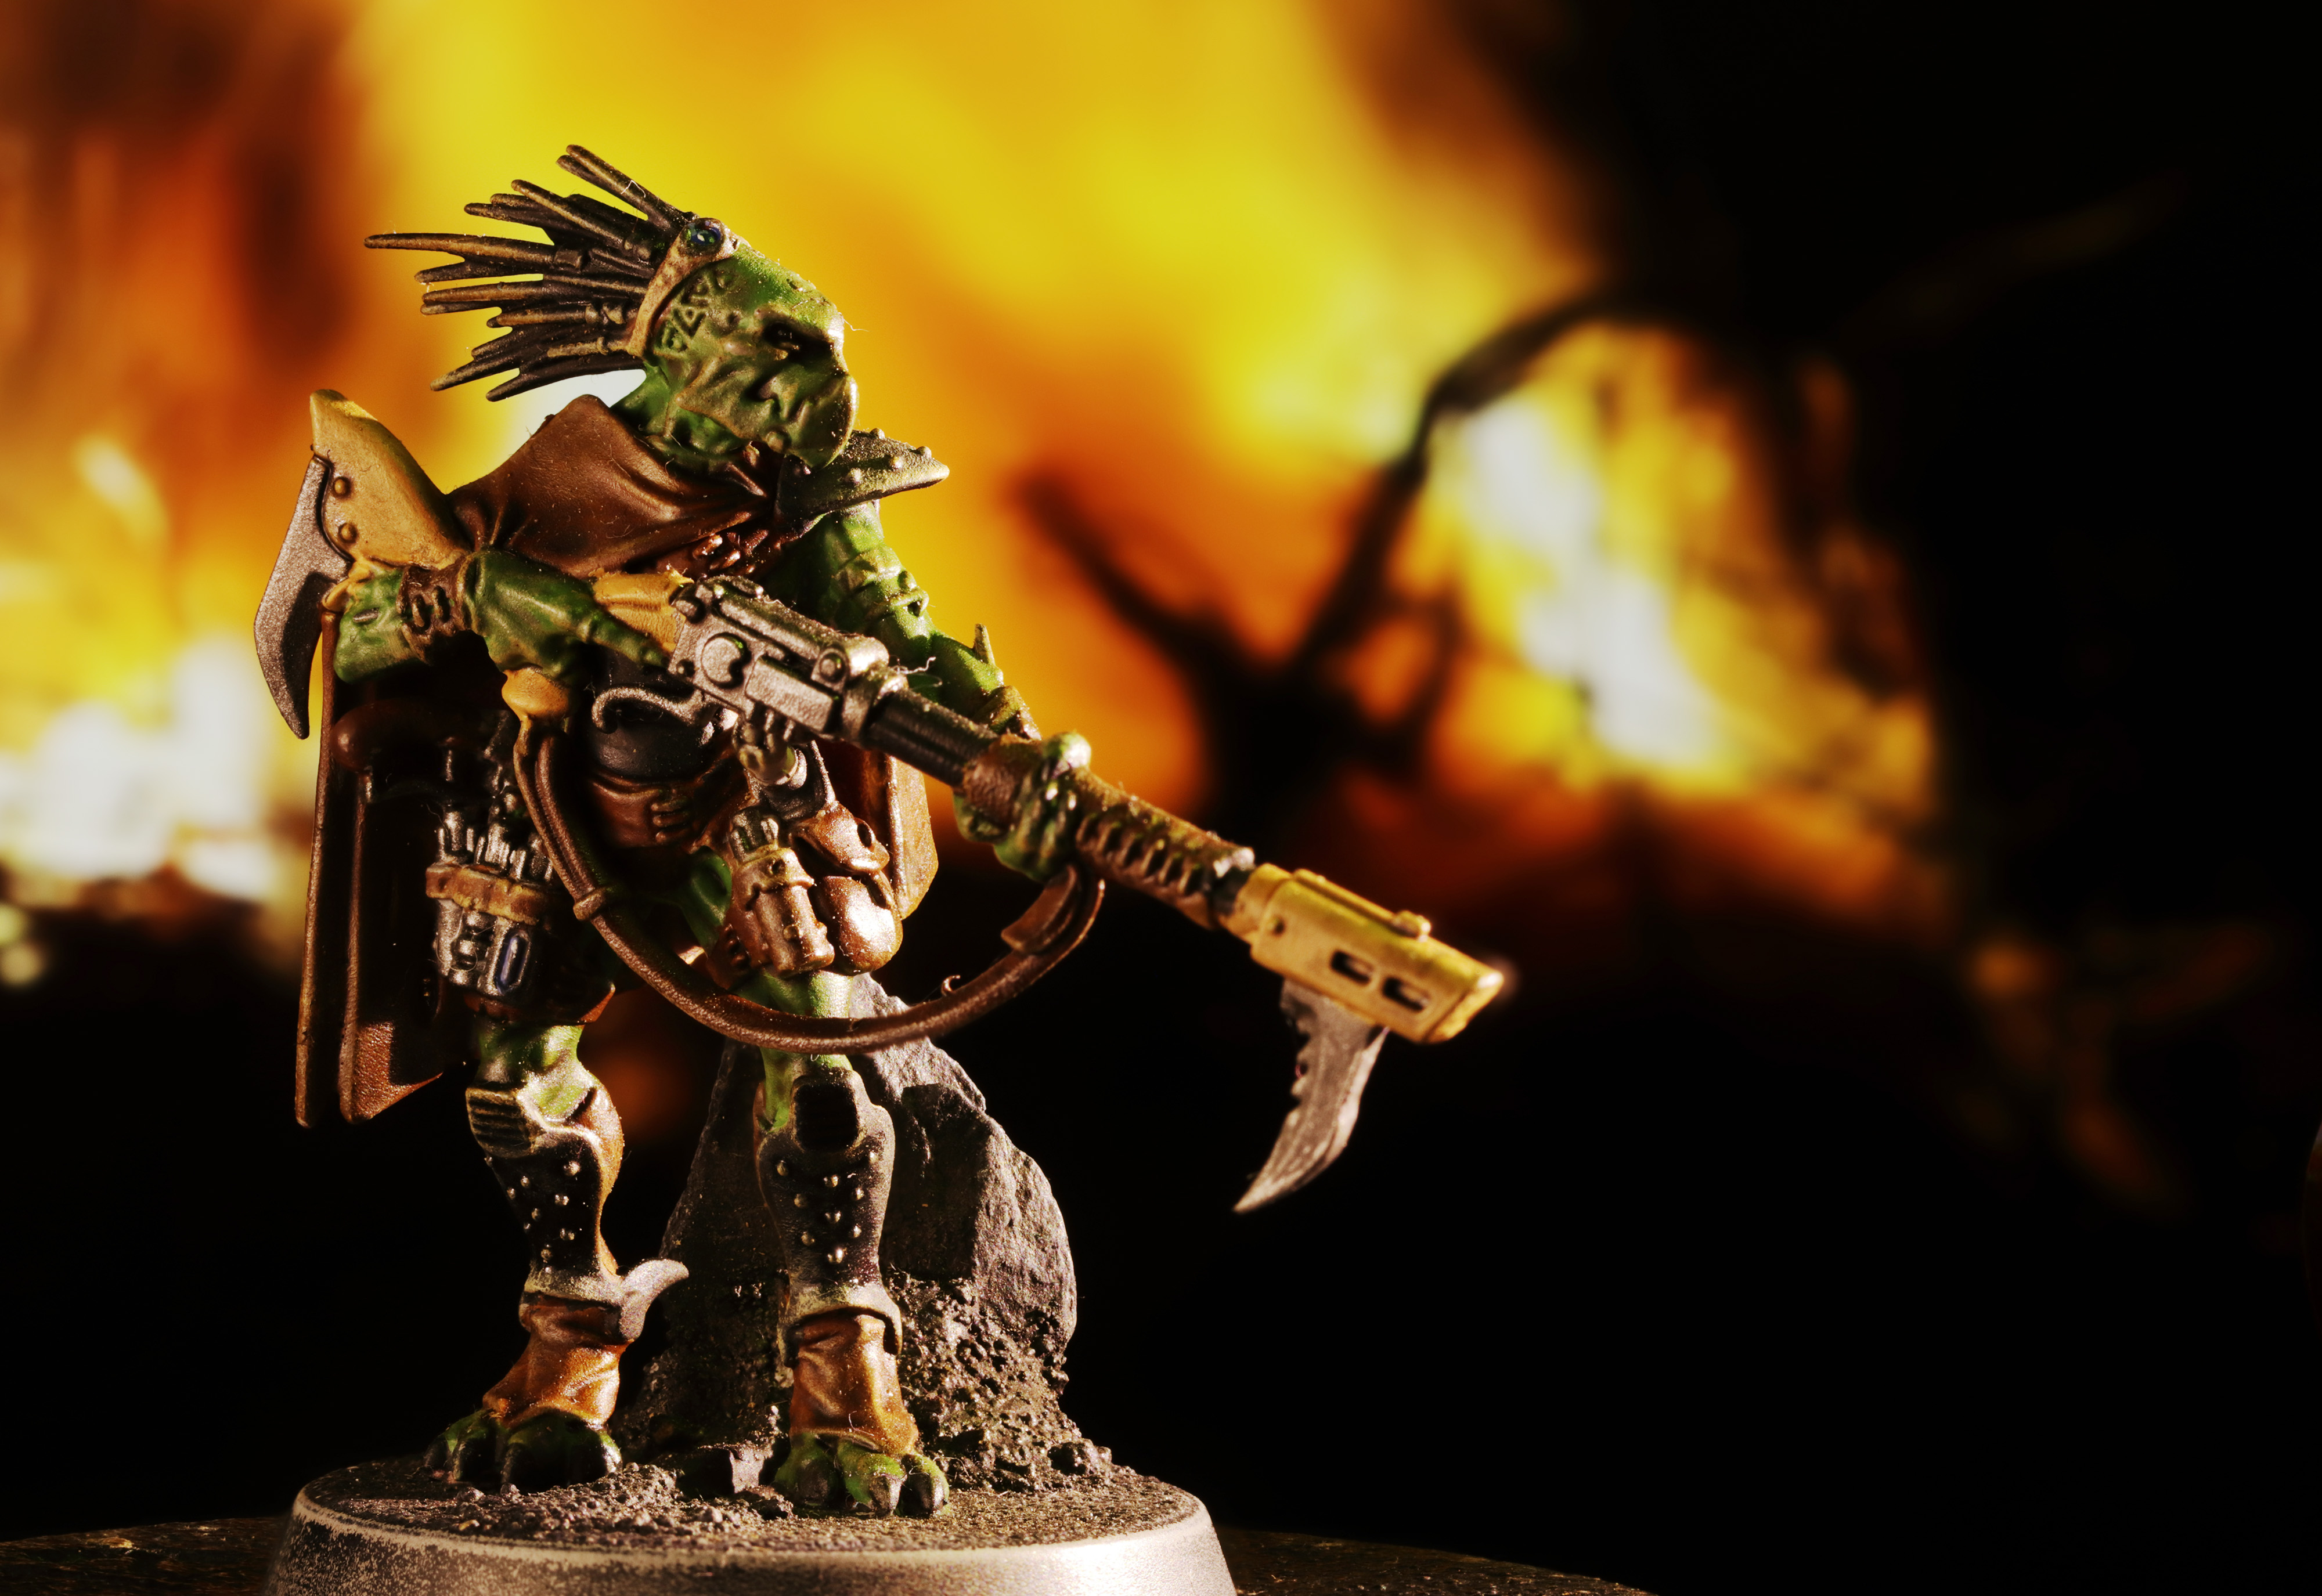 Warhammer fantasy figurine macro shot, lit using Adaptalux Studio LEDs